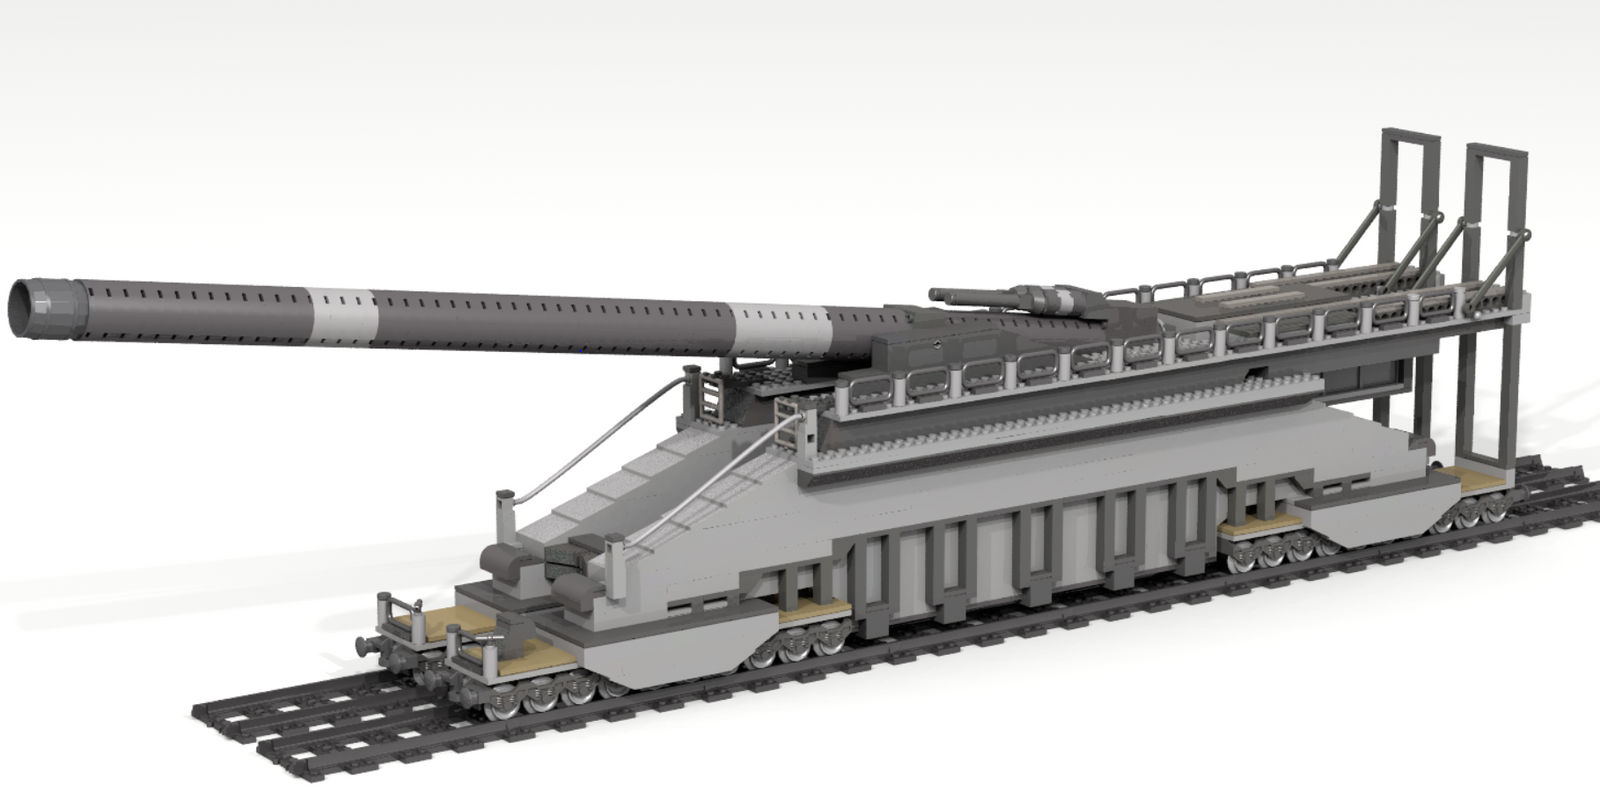 Schwerer Gustav, The 80-cm-Kanone (E) was a massive railway…